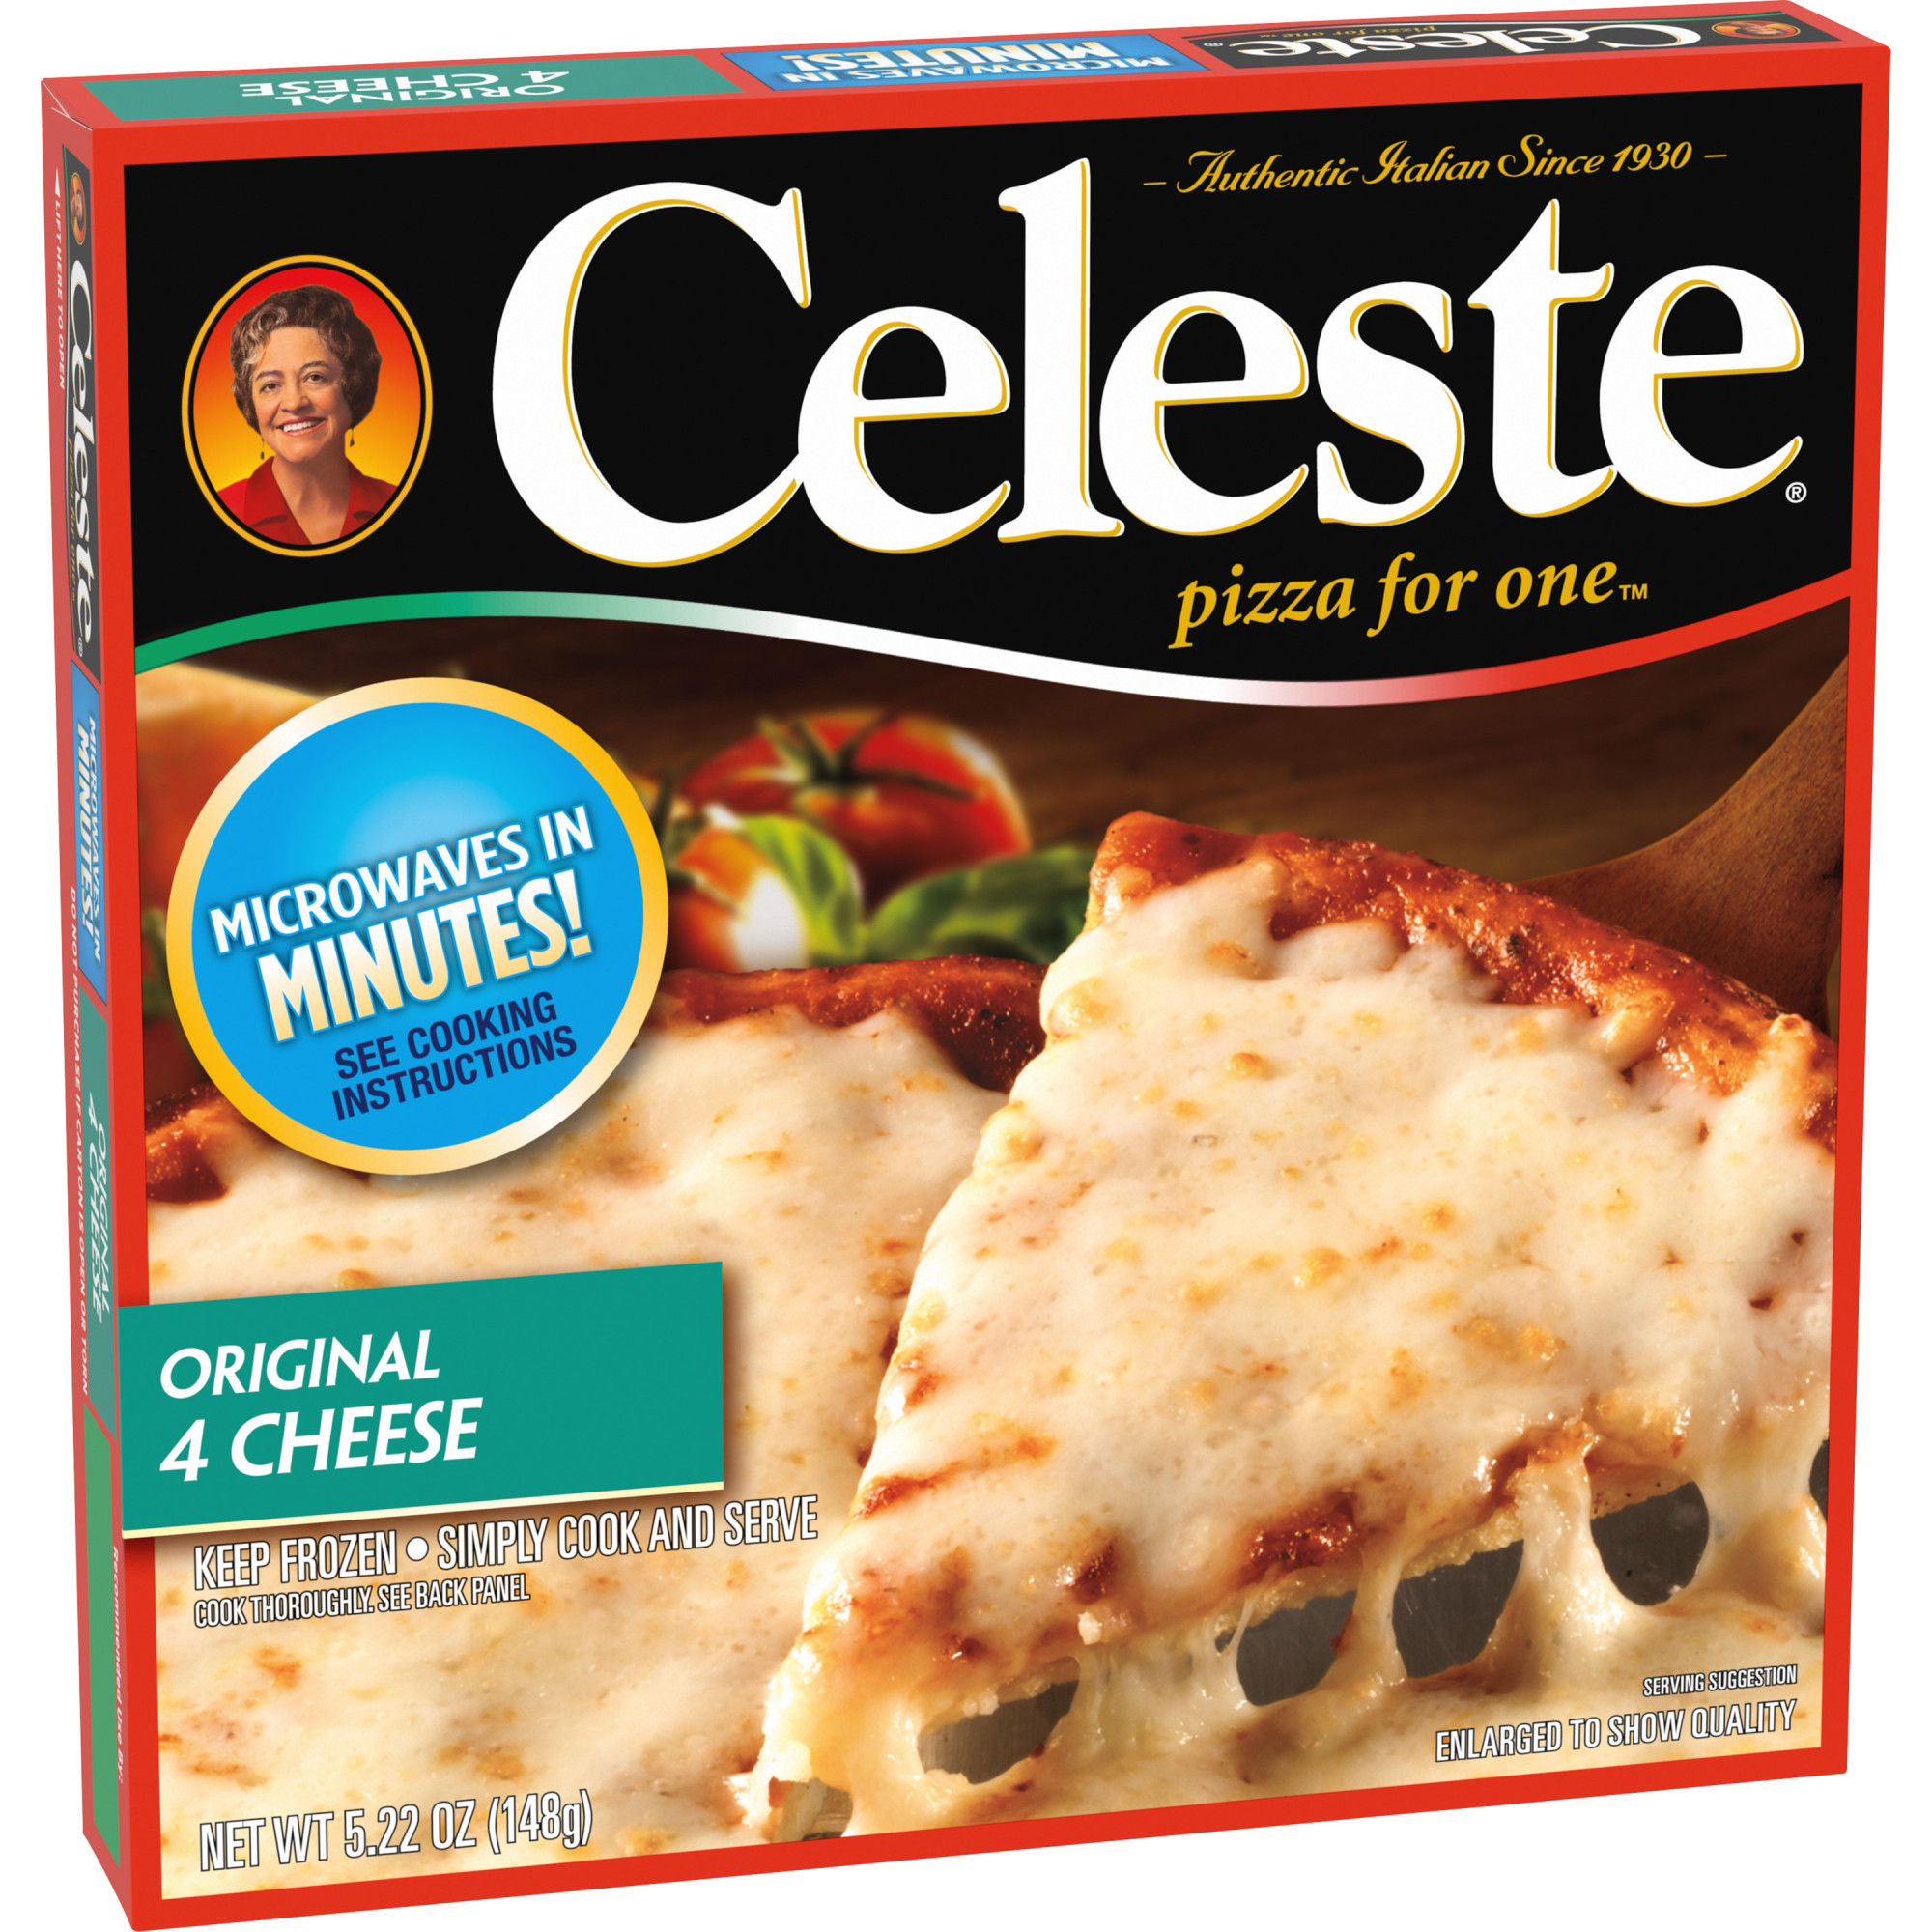 Celeste Original 4 Cheese Microwavable Frozen Pizza, 5.22 oz (Frozen) - image 2 of 6